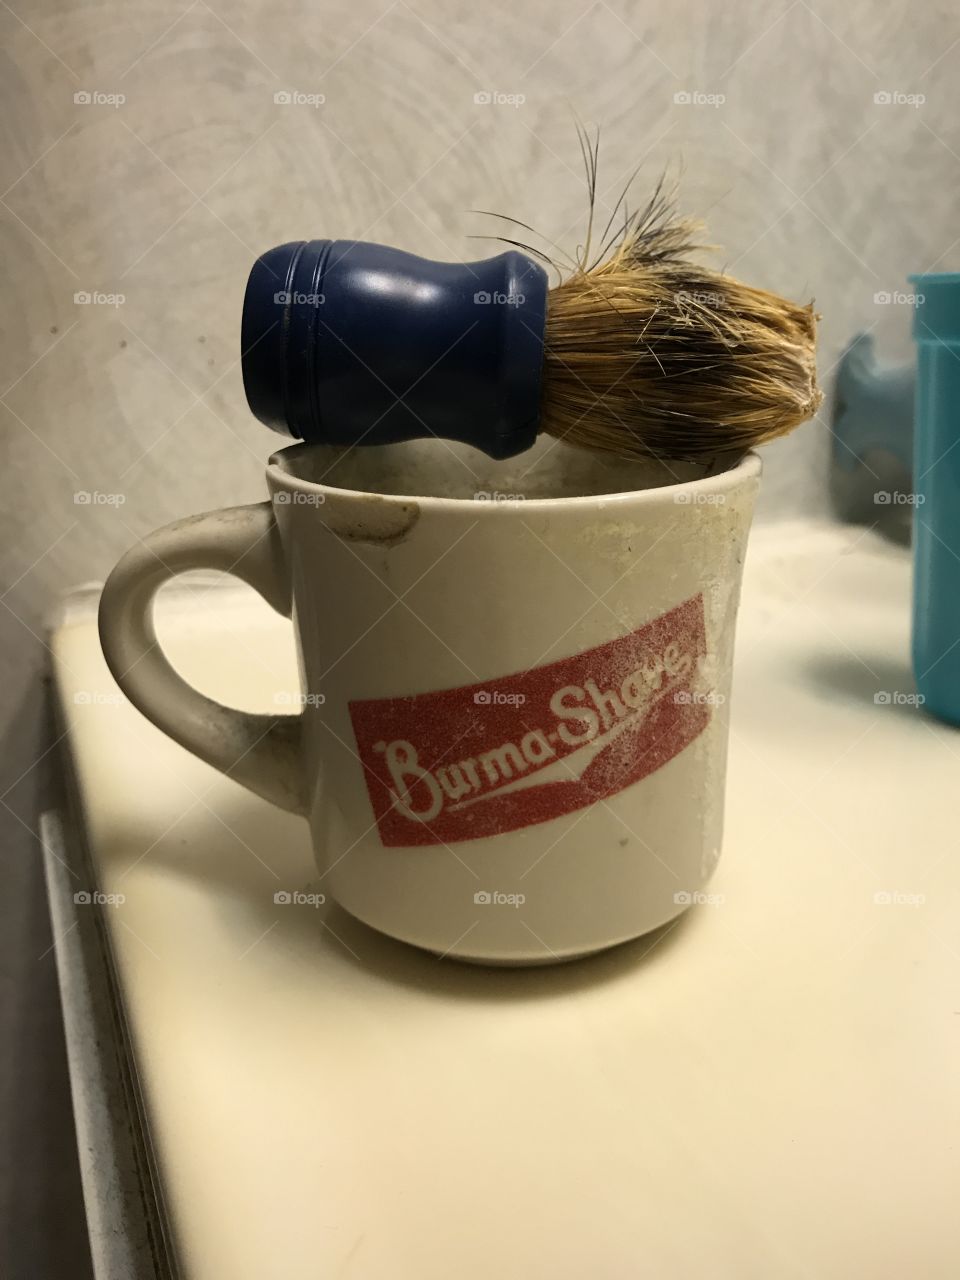 Burma Shave mug and brush